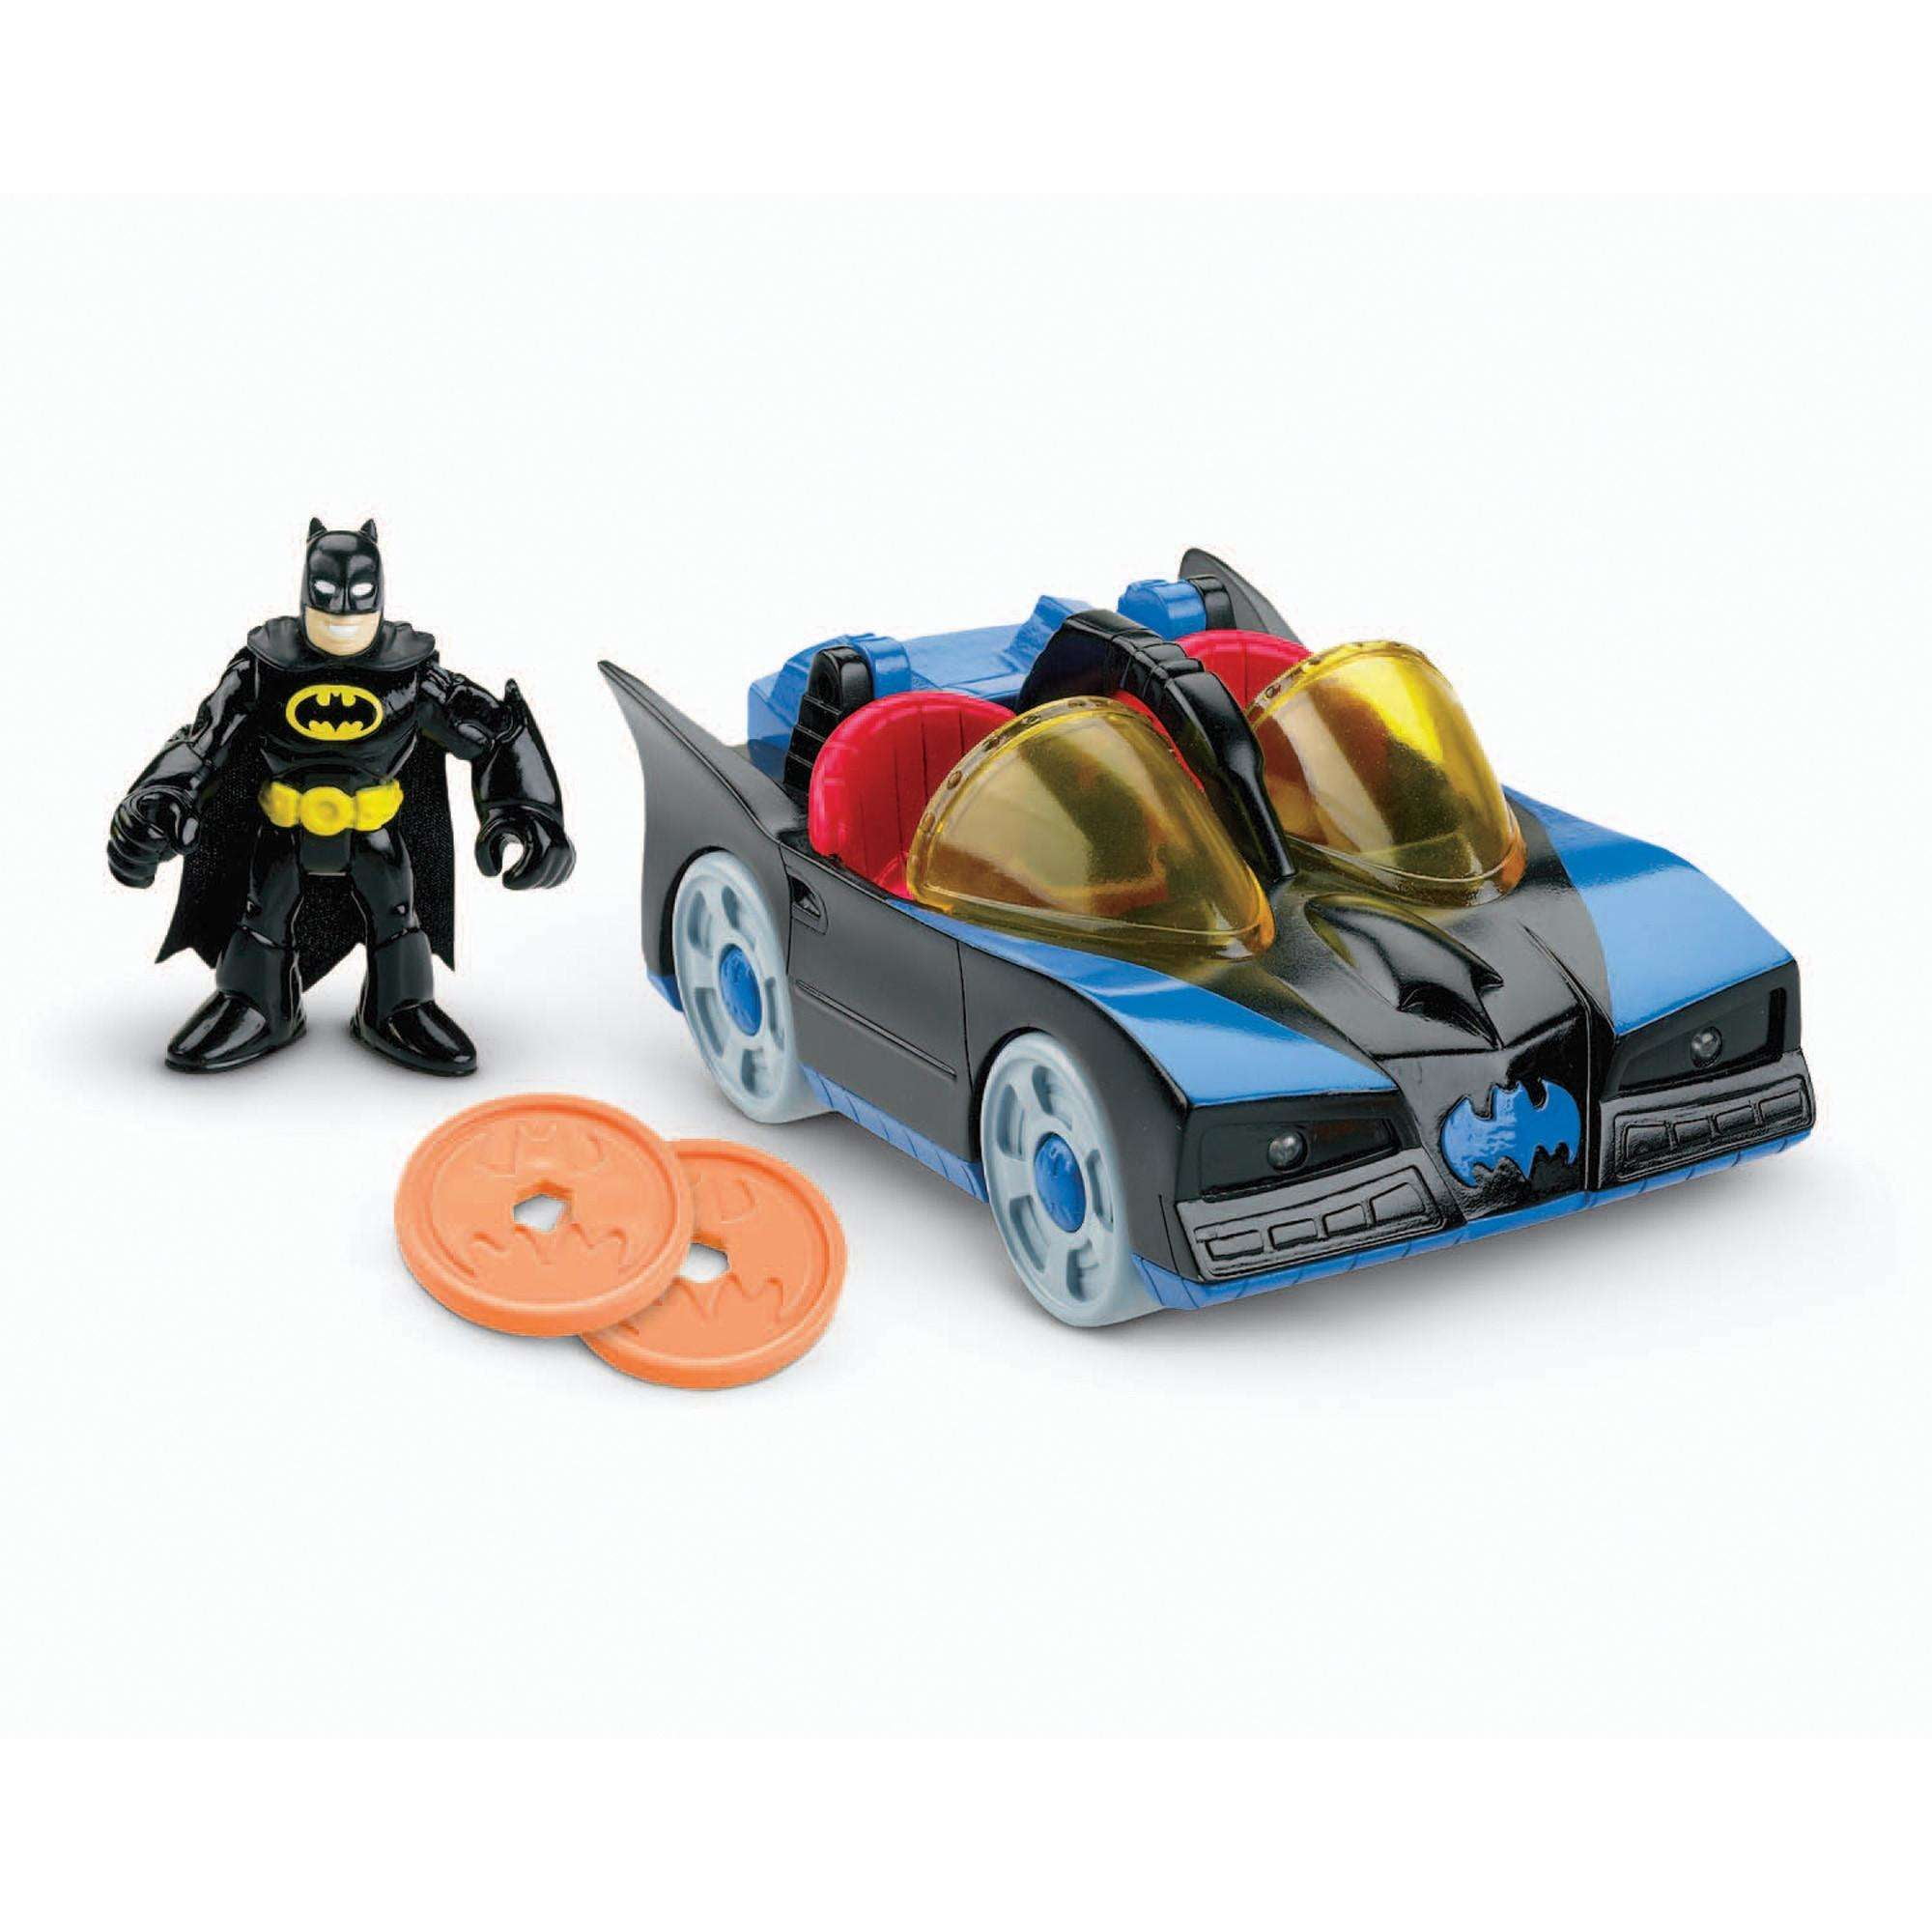 Fisher Price Imaginext Batmobile Autozubehör & Batman Abbildung Spielzeug Neu 